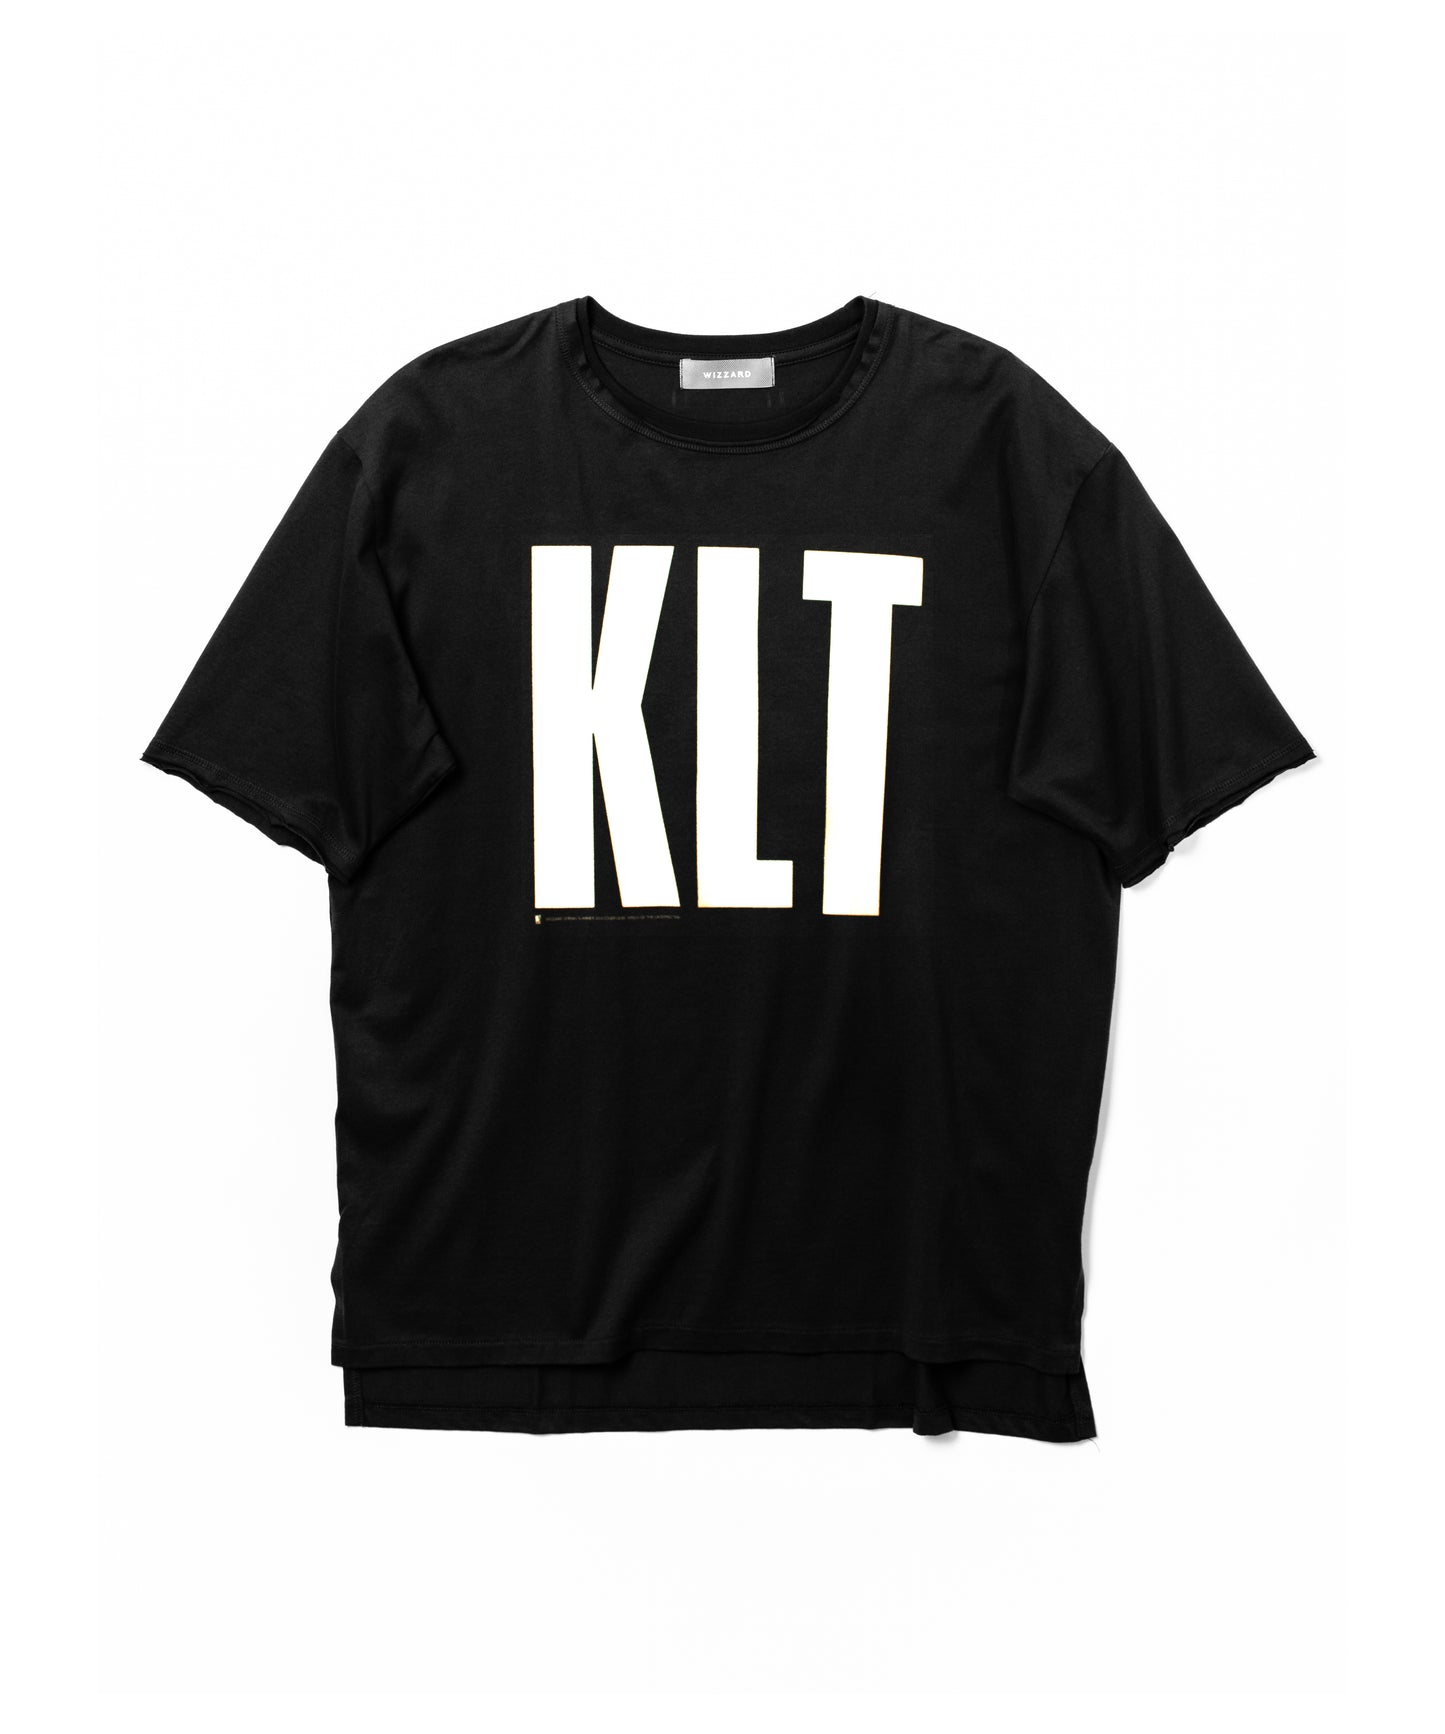 graphic t-shirt "klt"